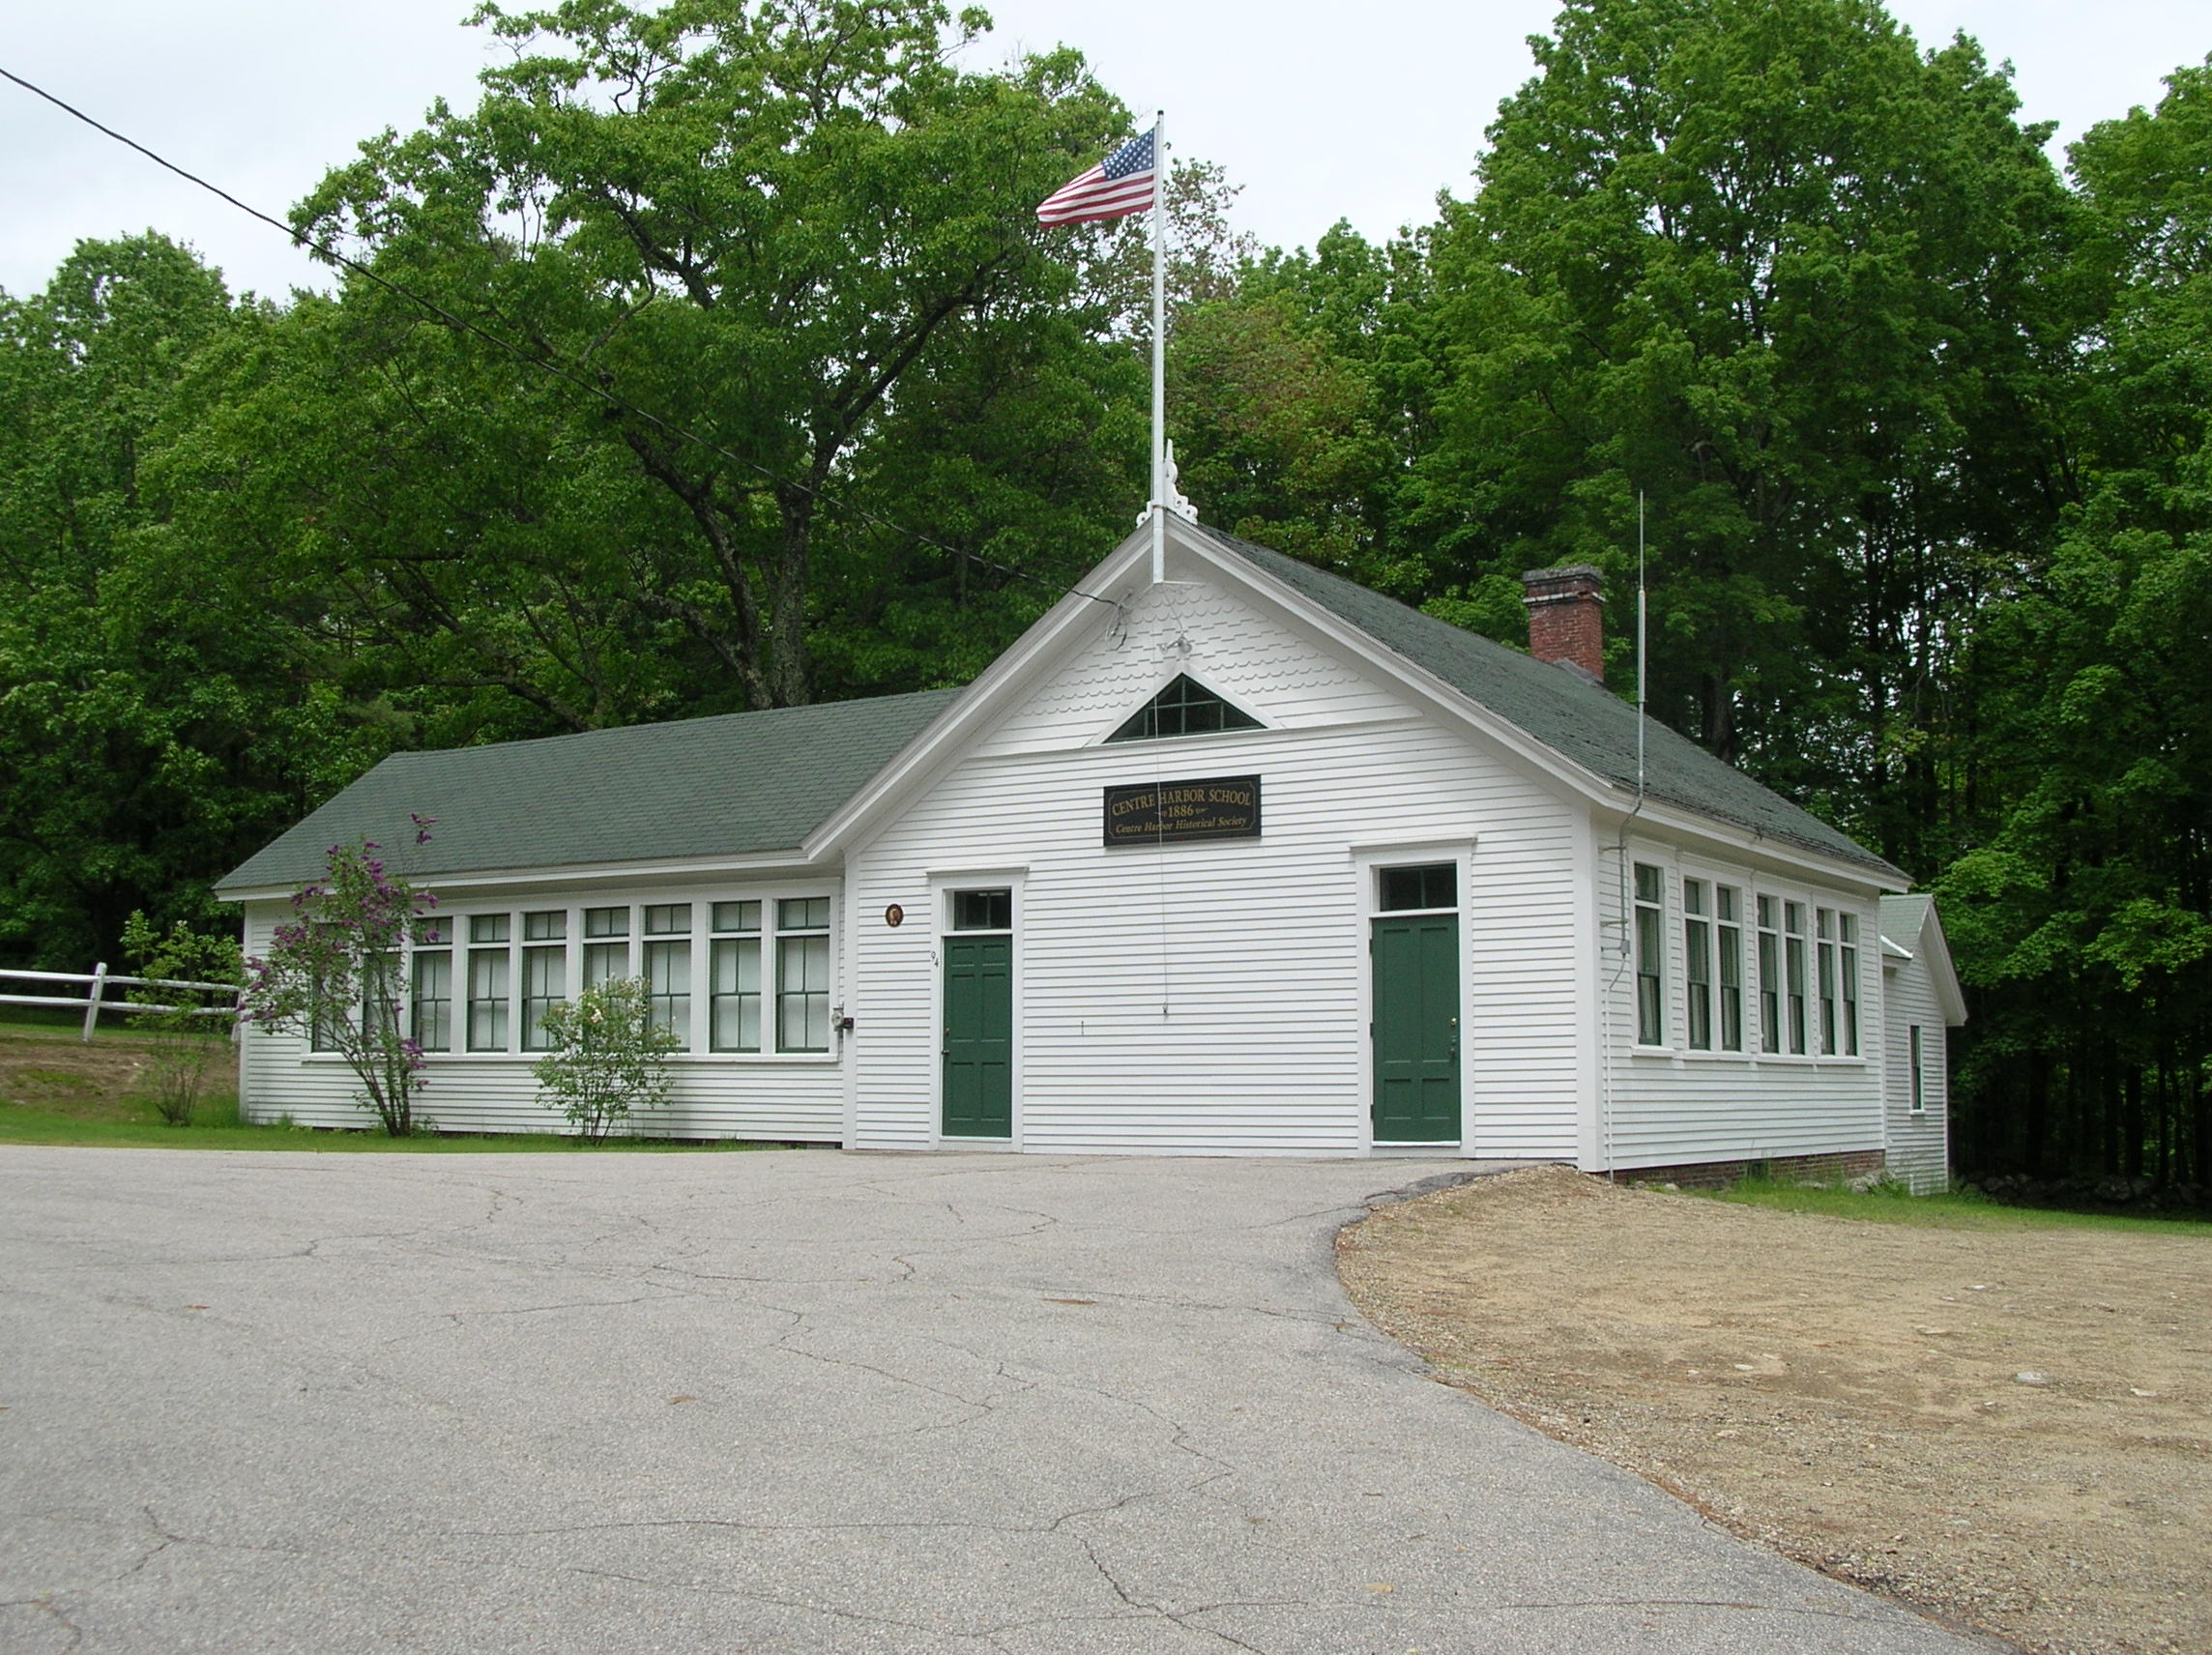 1886 Village Schoolhouse